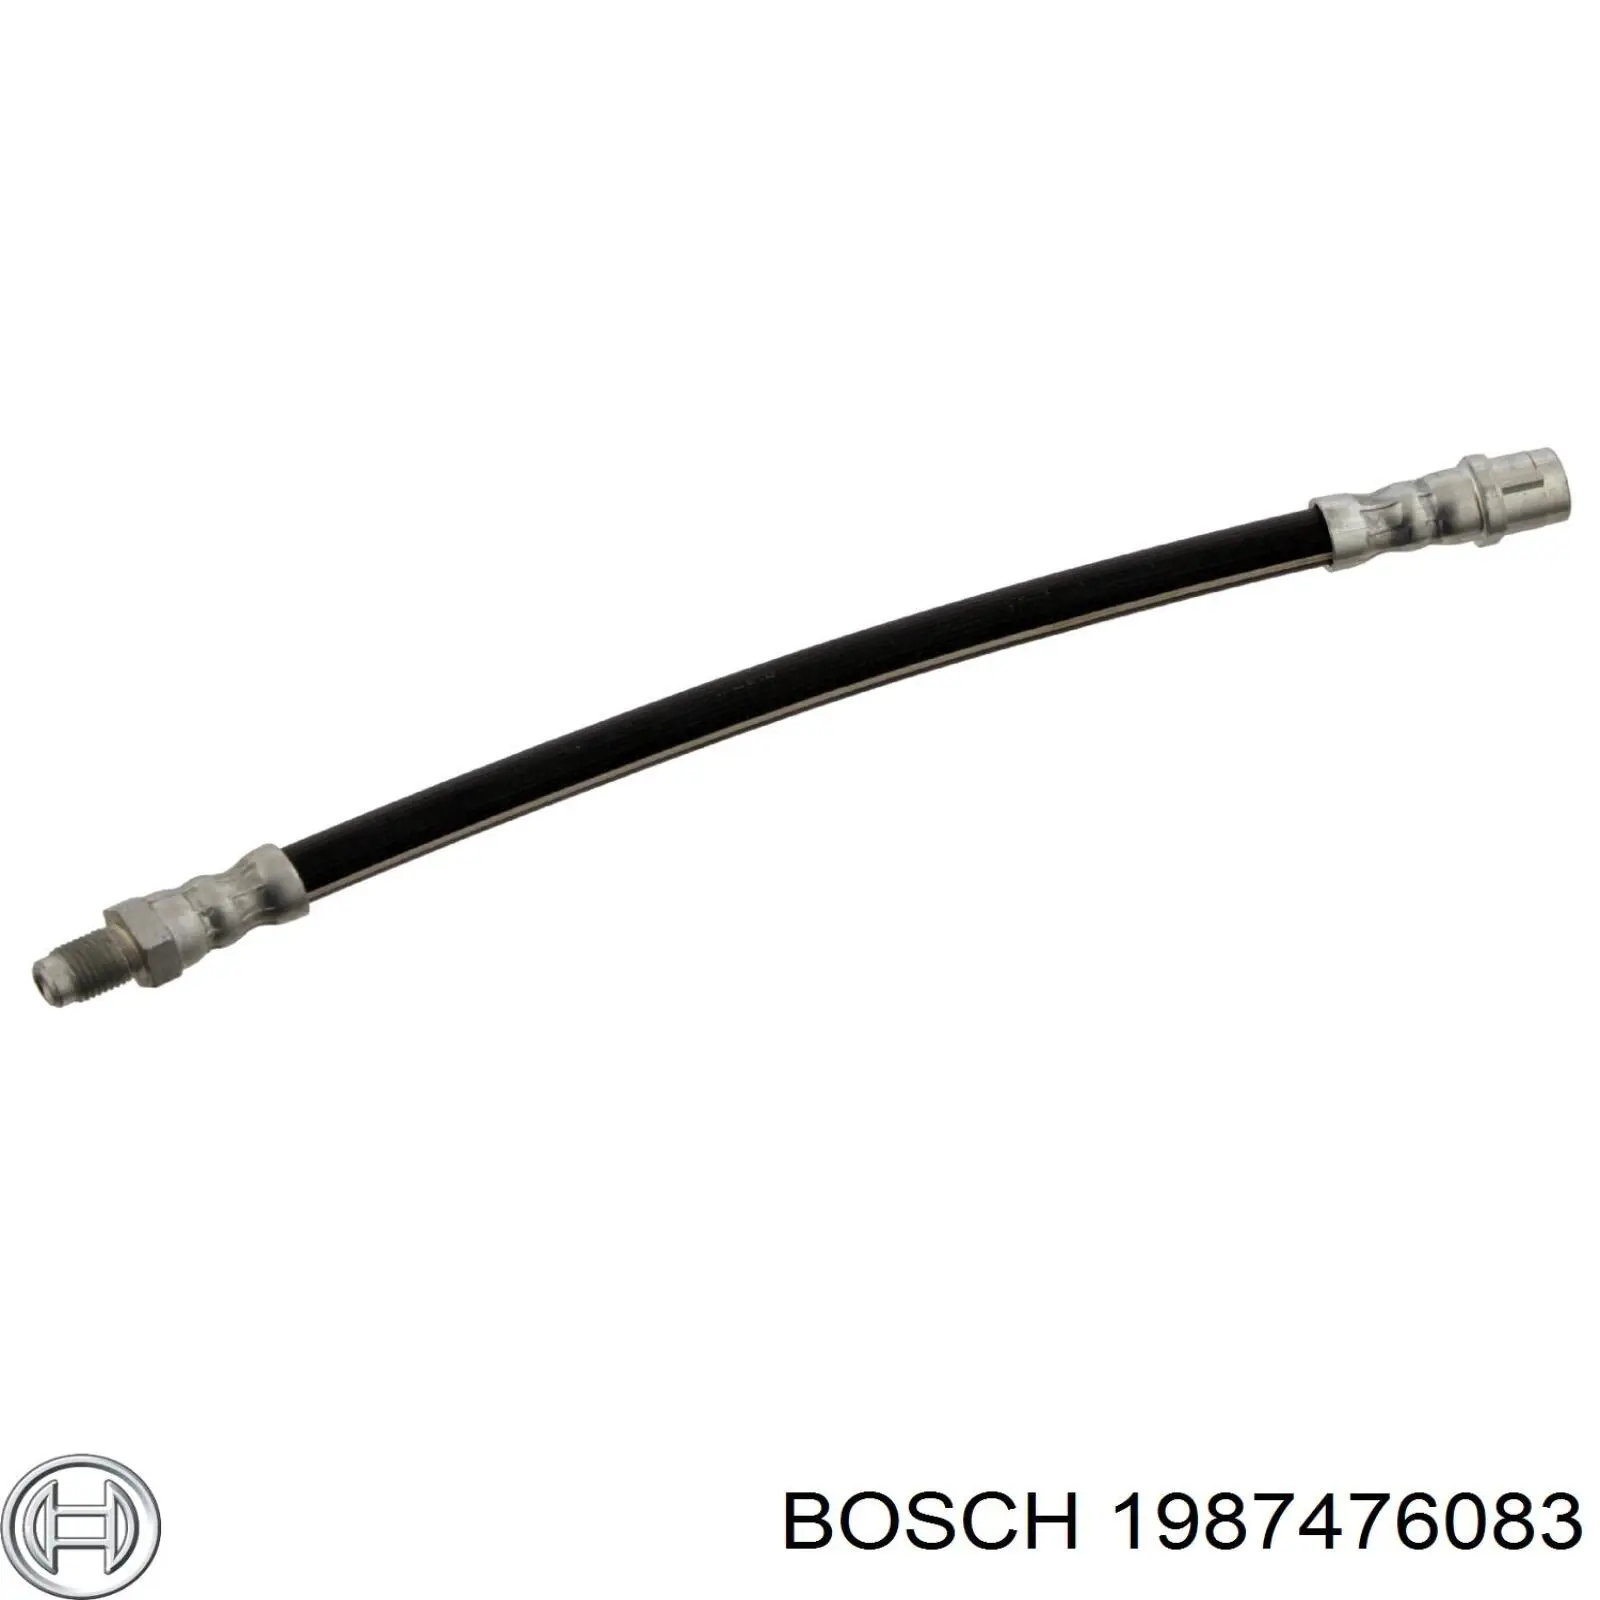 1987476083 Bosch latiguillo de freno trasero